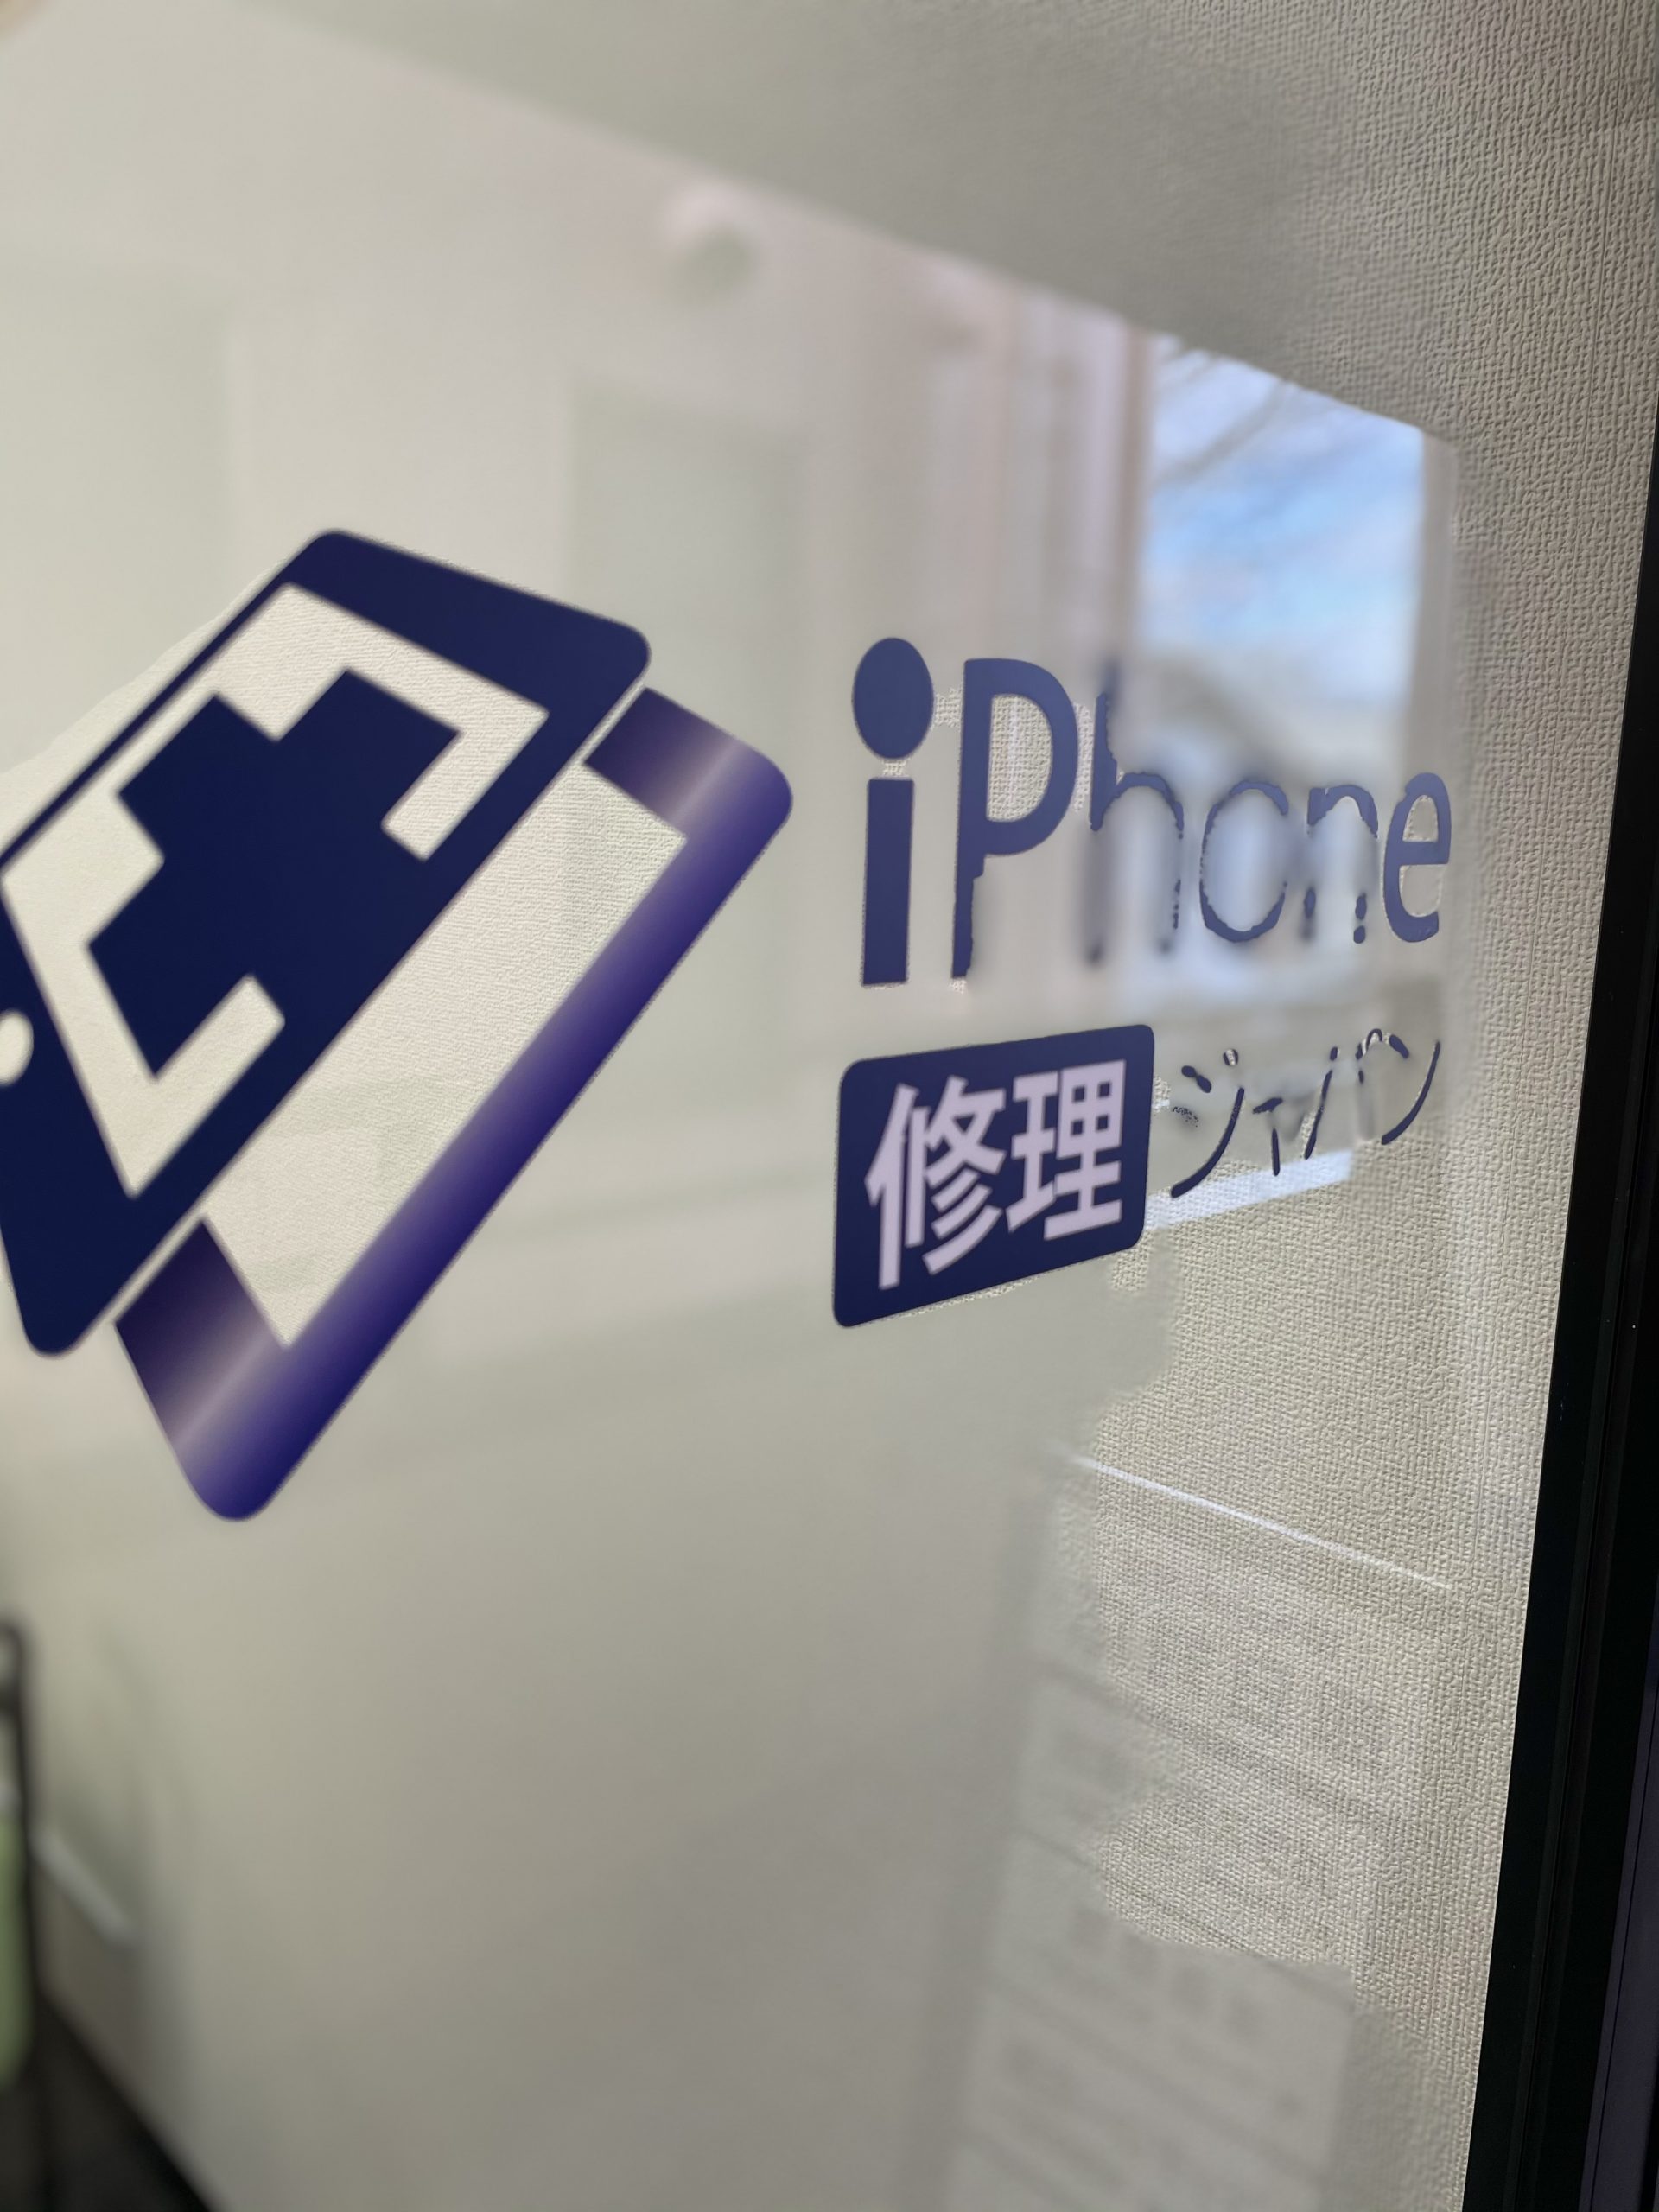 iPhone修理ジャパン経堂店の年末年始営業のお知らせ。